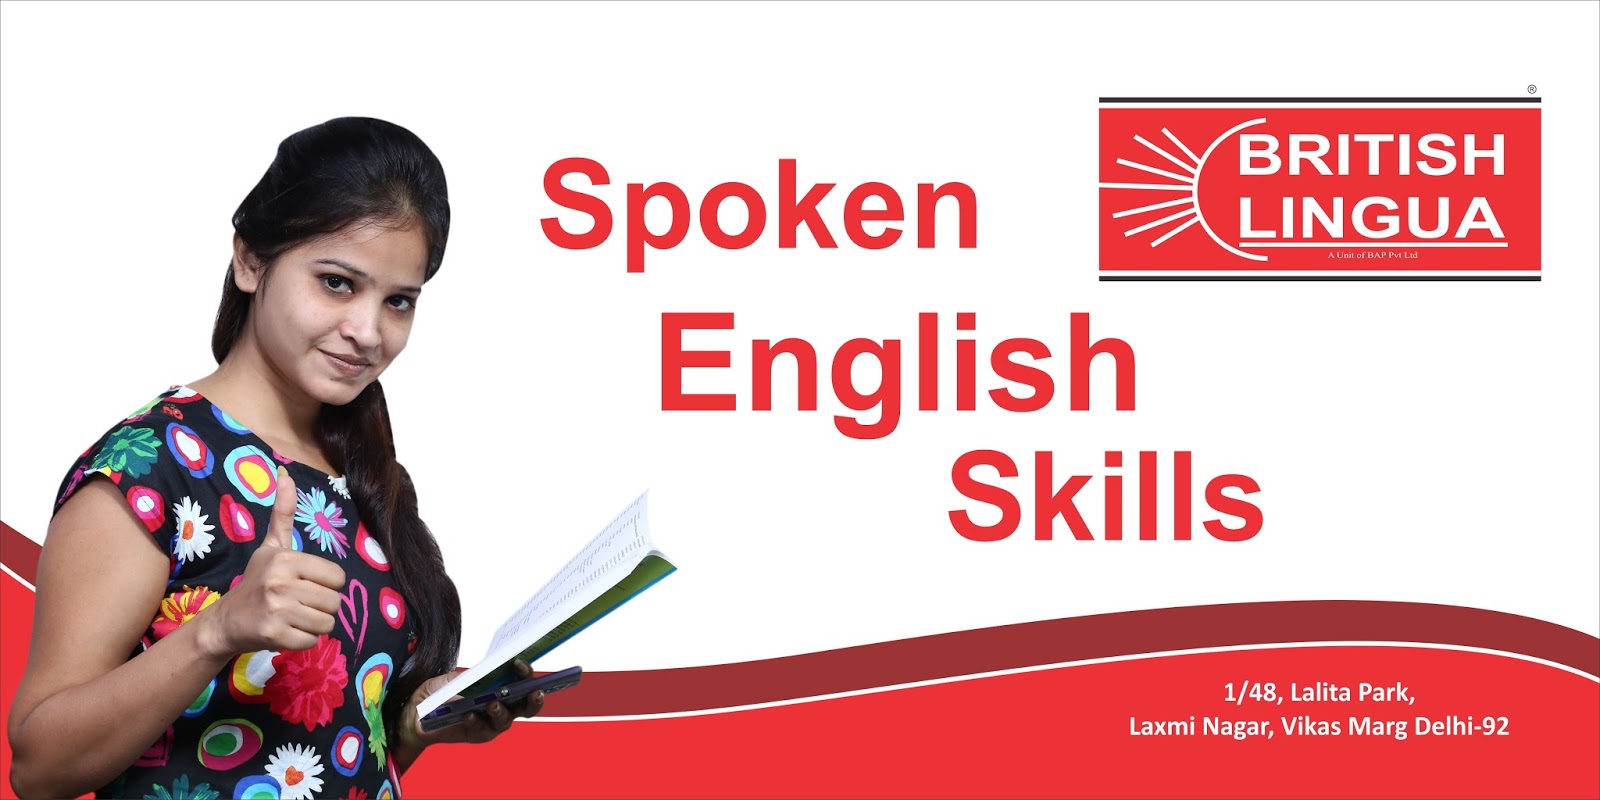 Даст spoken. Spoken English. Инглиш СКИЛЛ. Spoken English фото. Spoken English books.